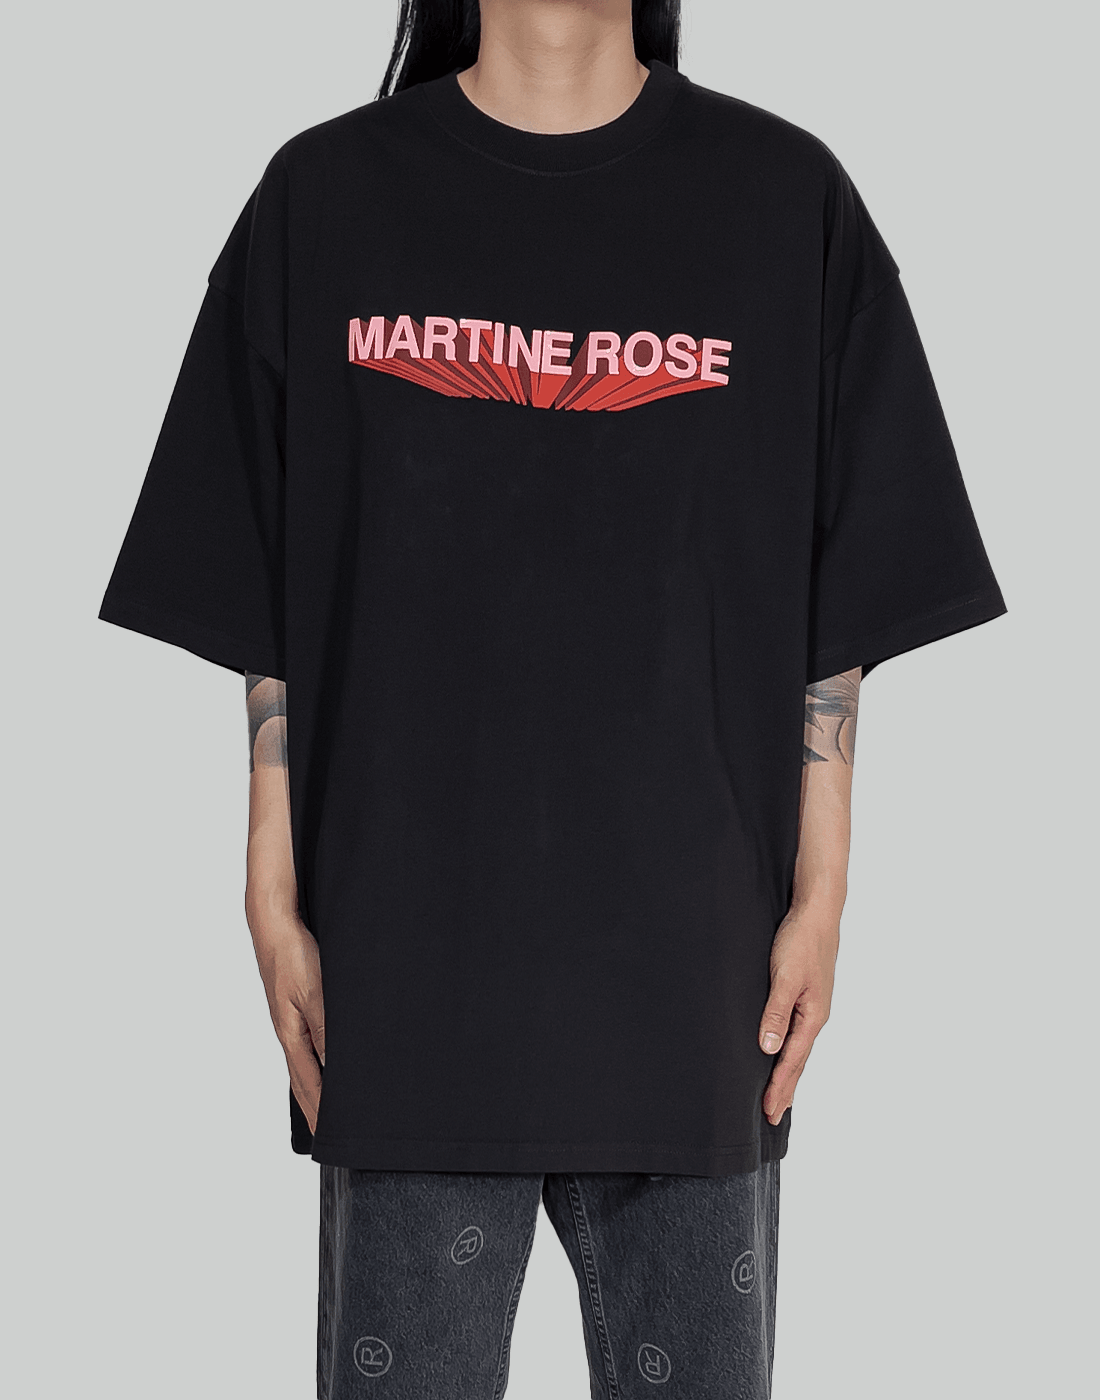 martine rose logo